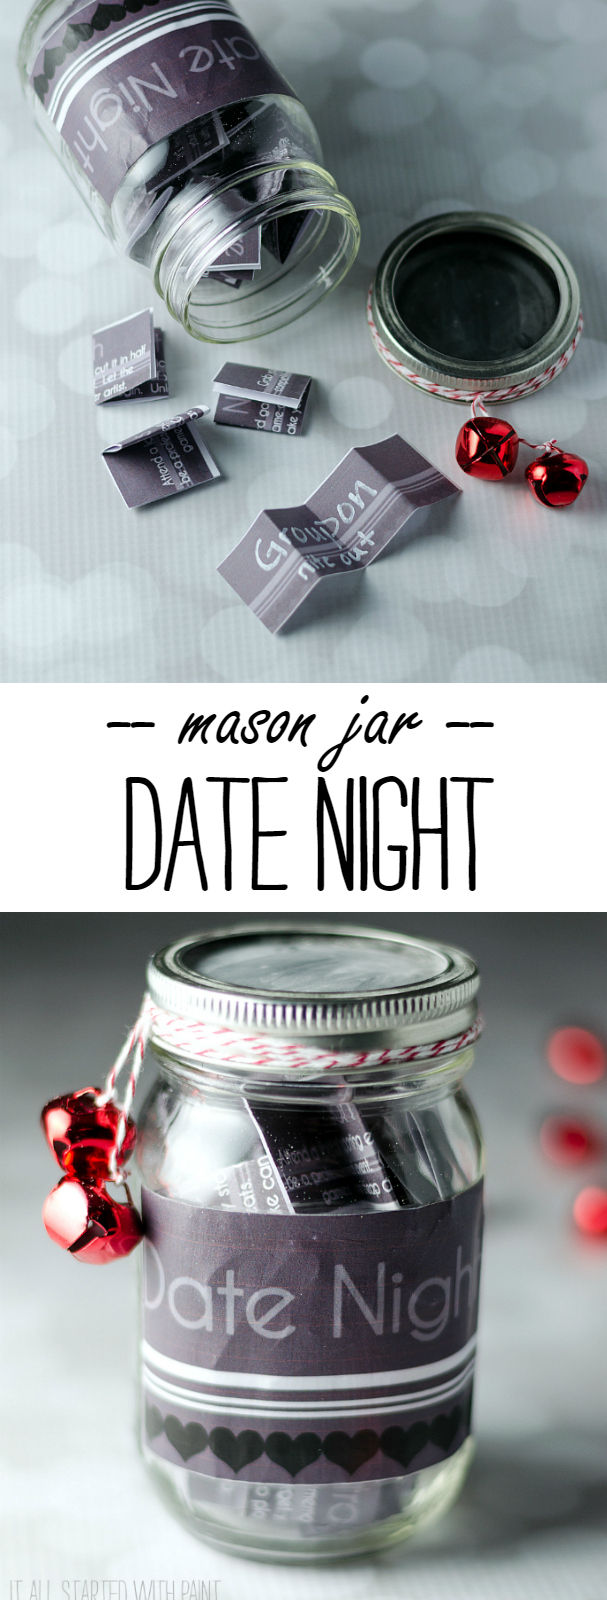 Date Night in Jar - Mason Jar Craft Ideas